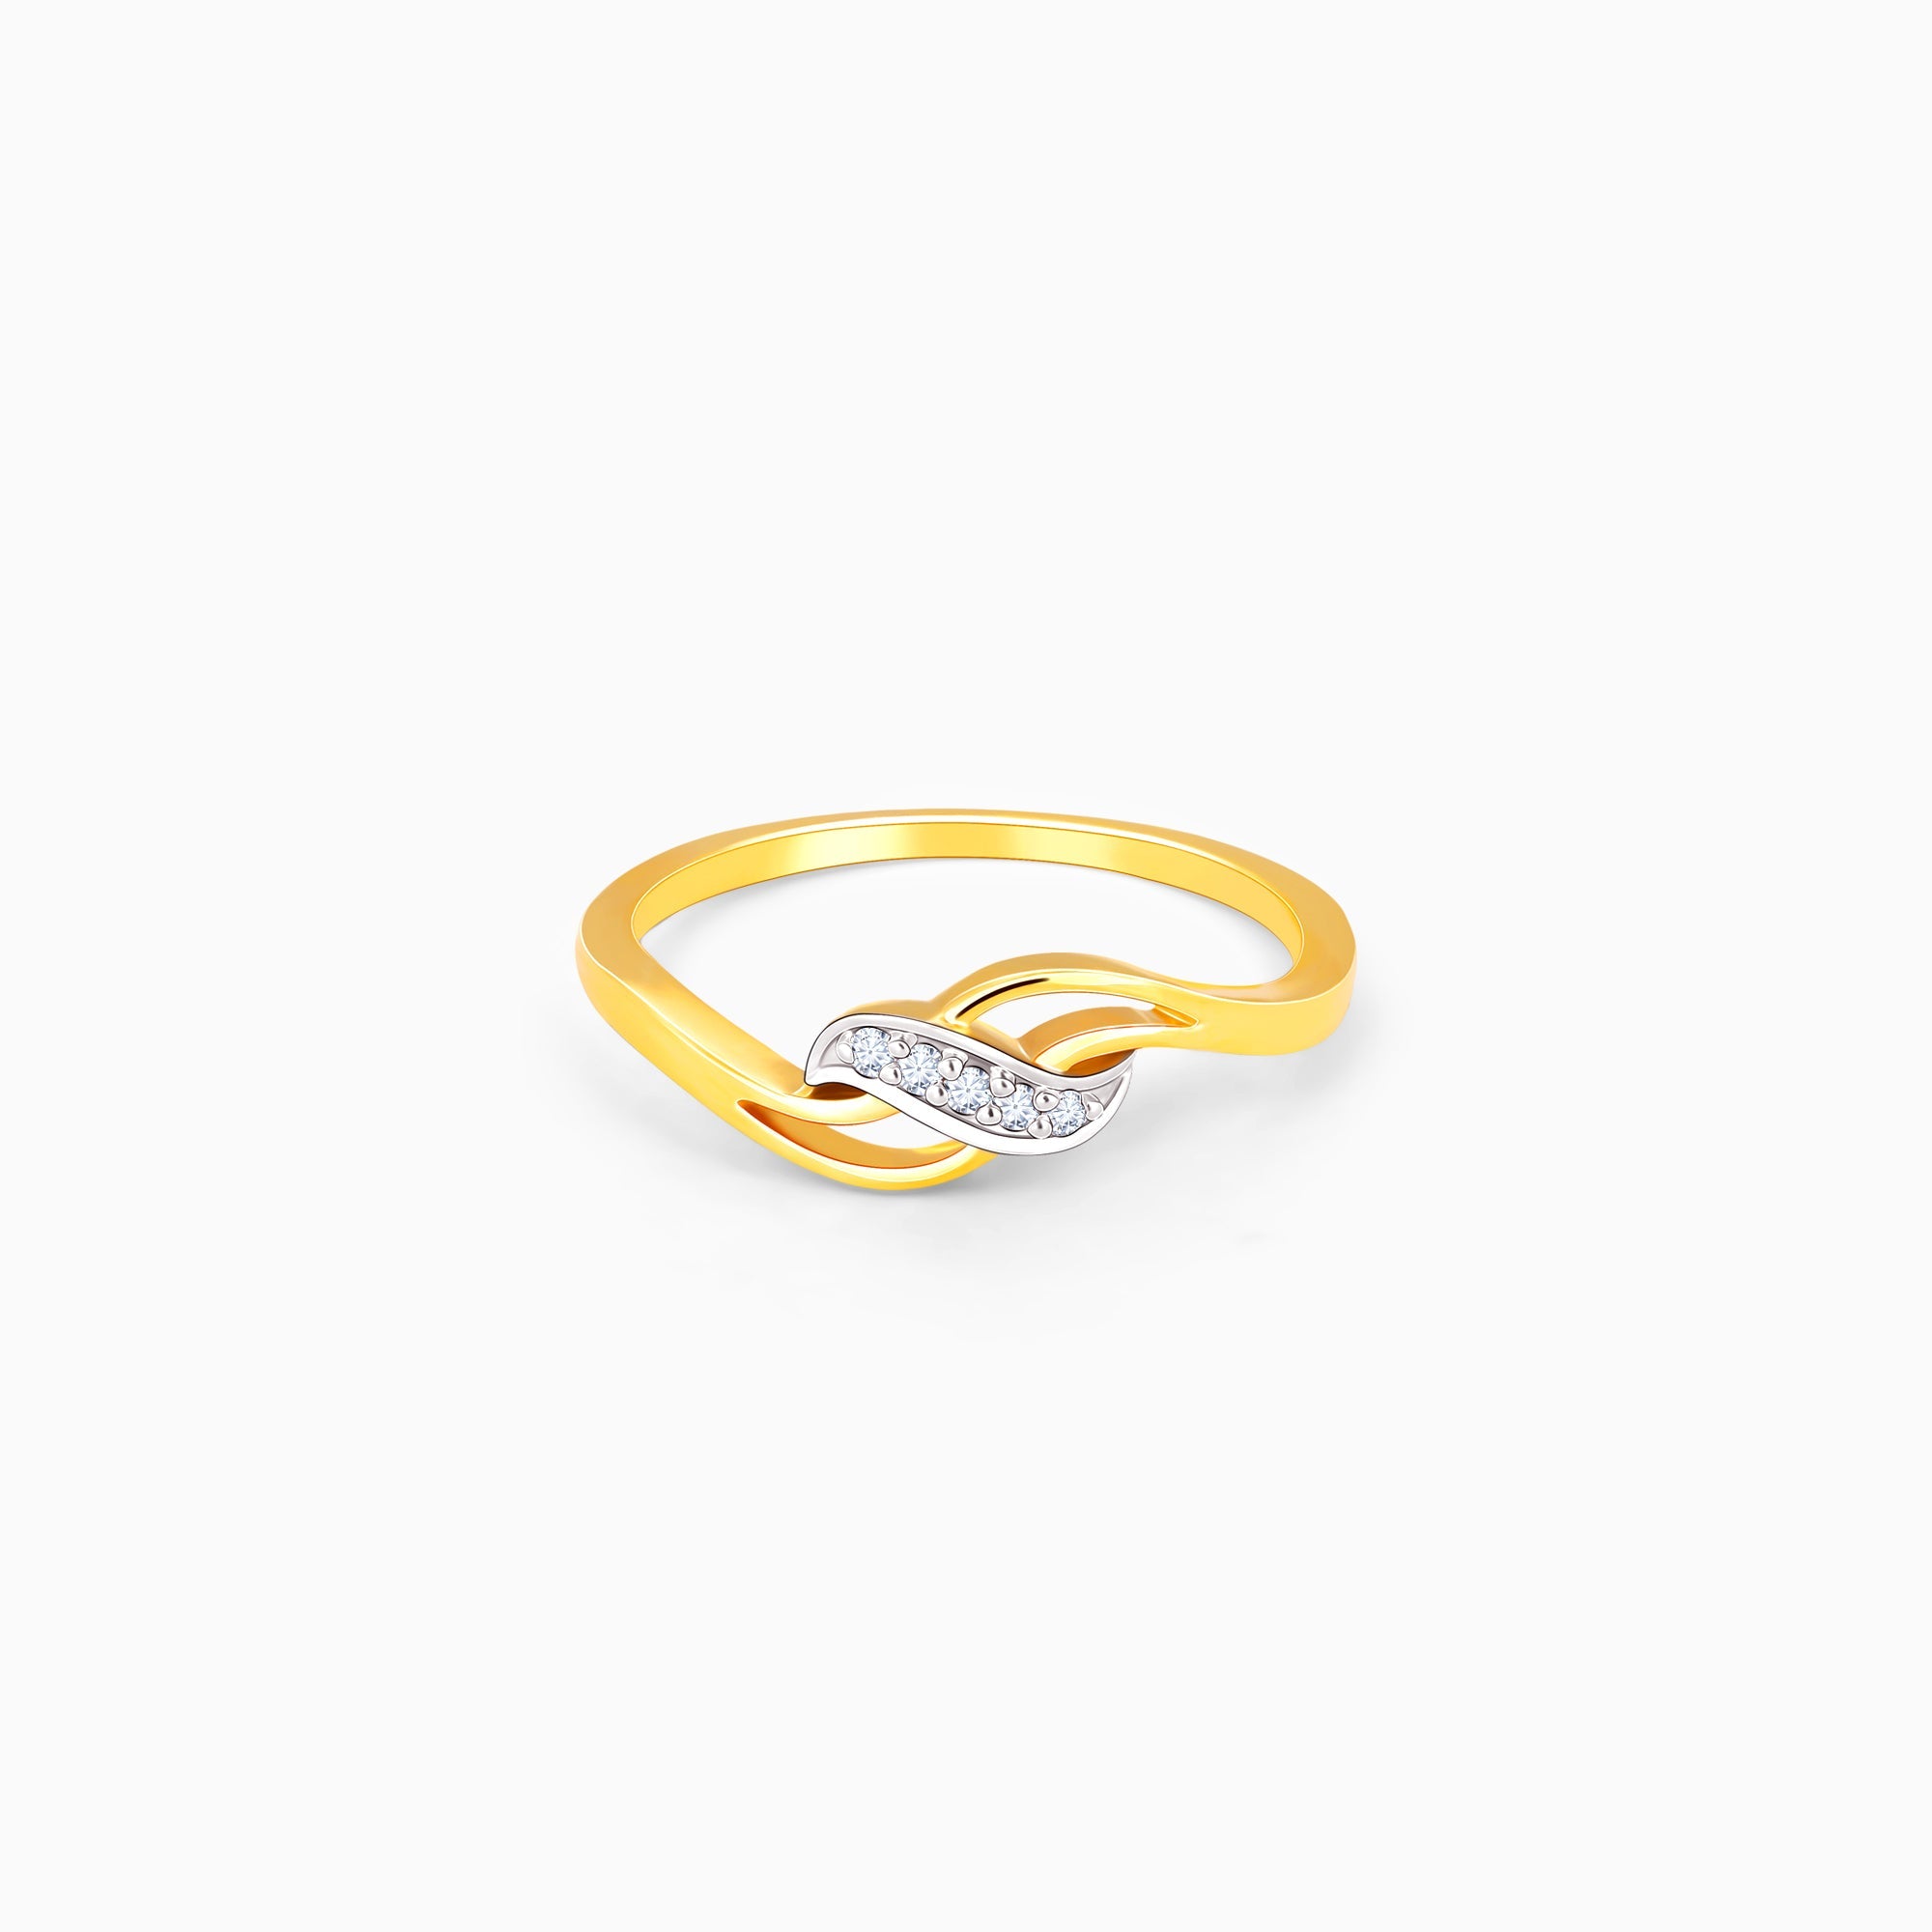 Buy Yellow Gold Rings for Women by Iski Uski Online | Ajio.com